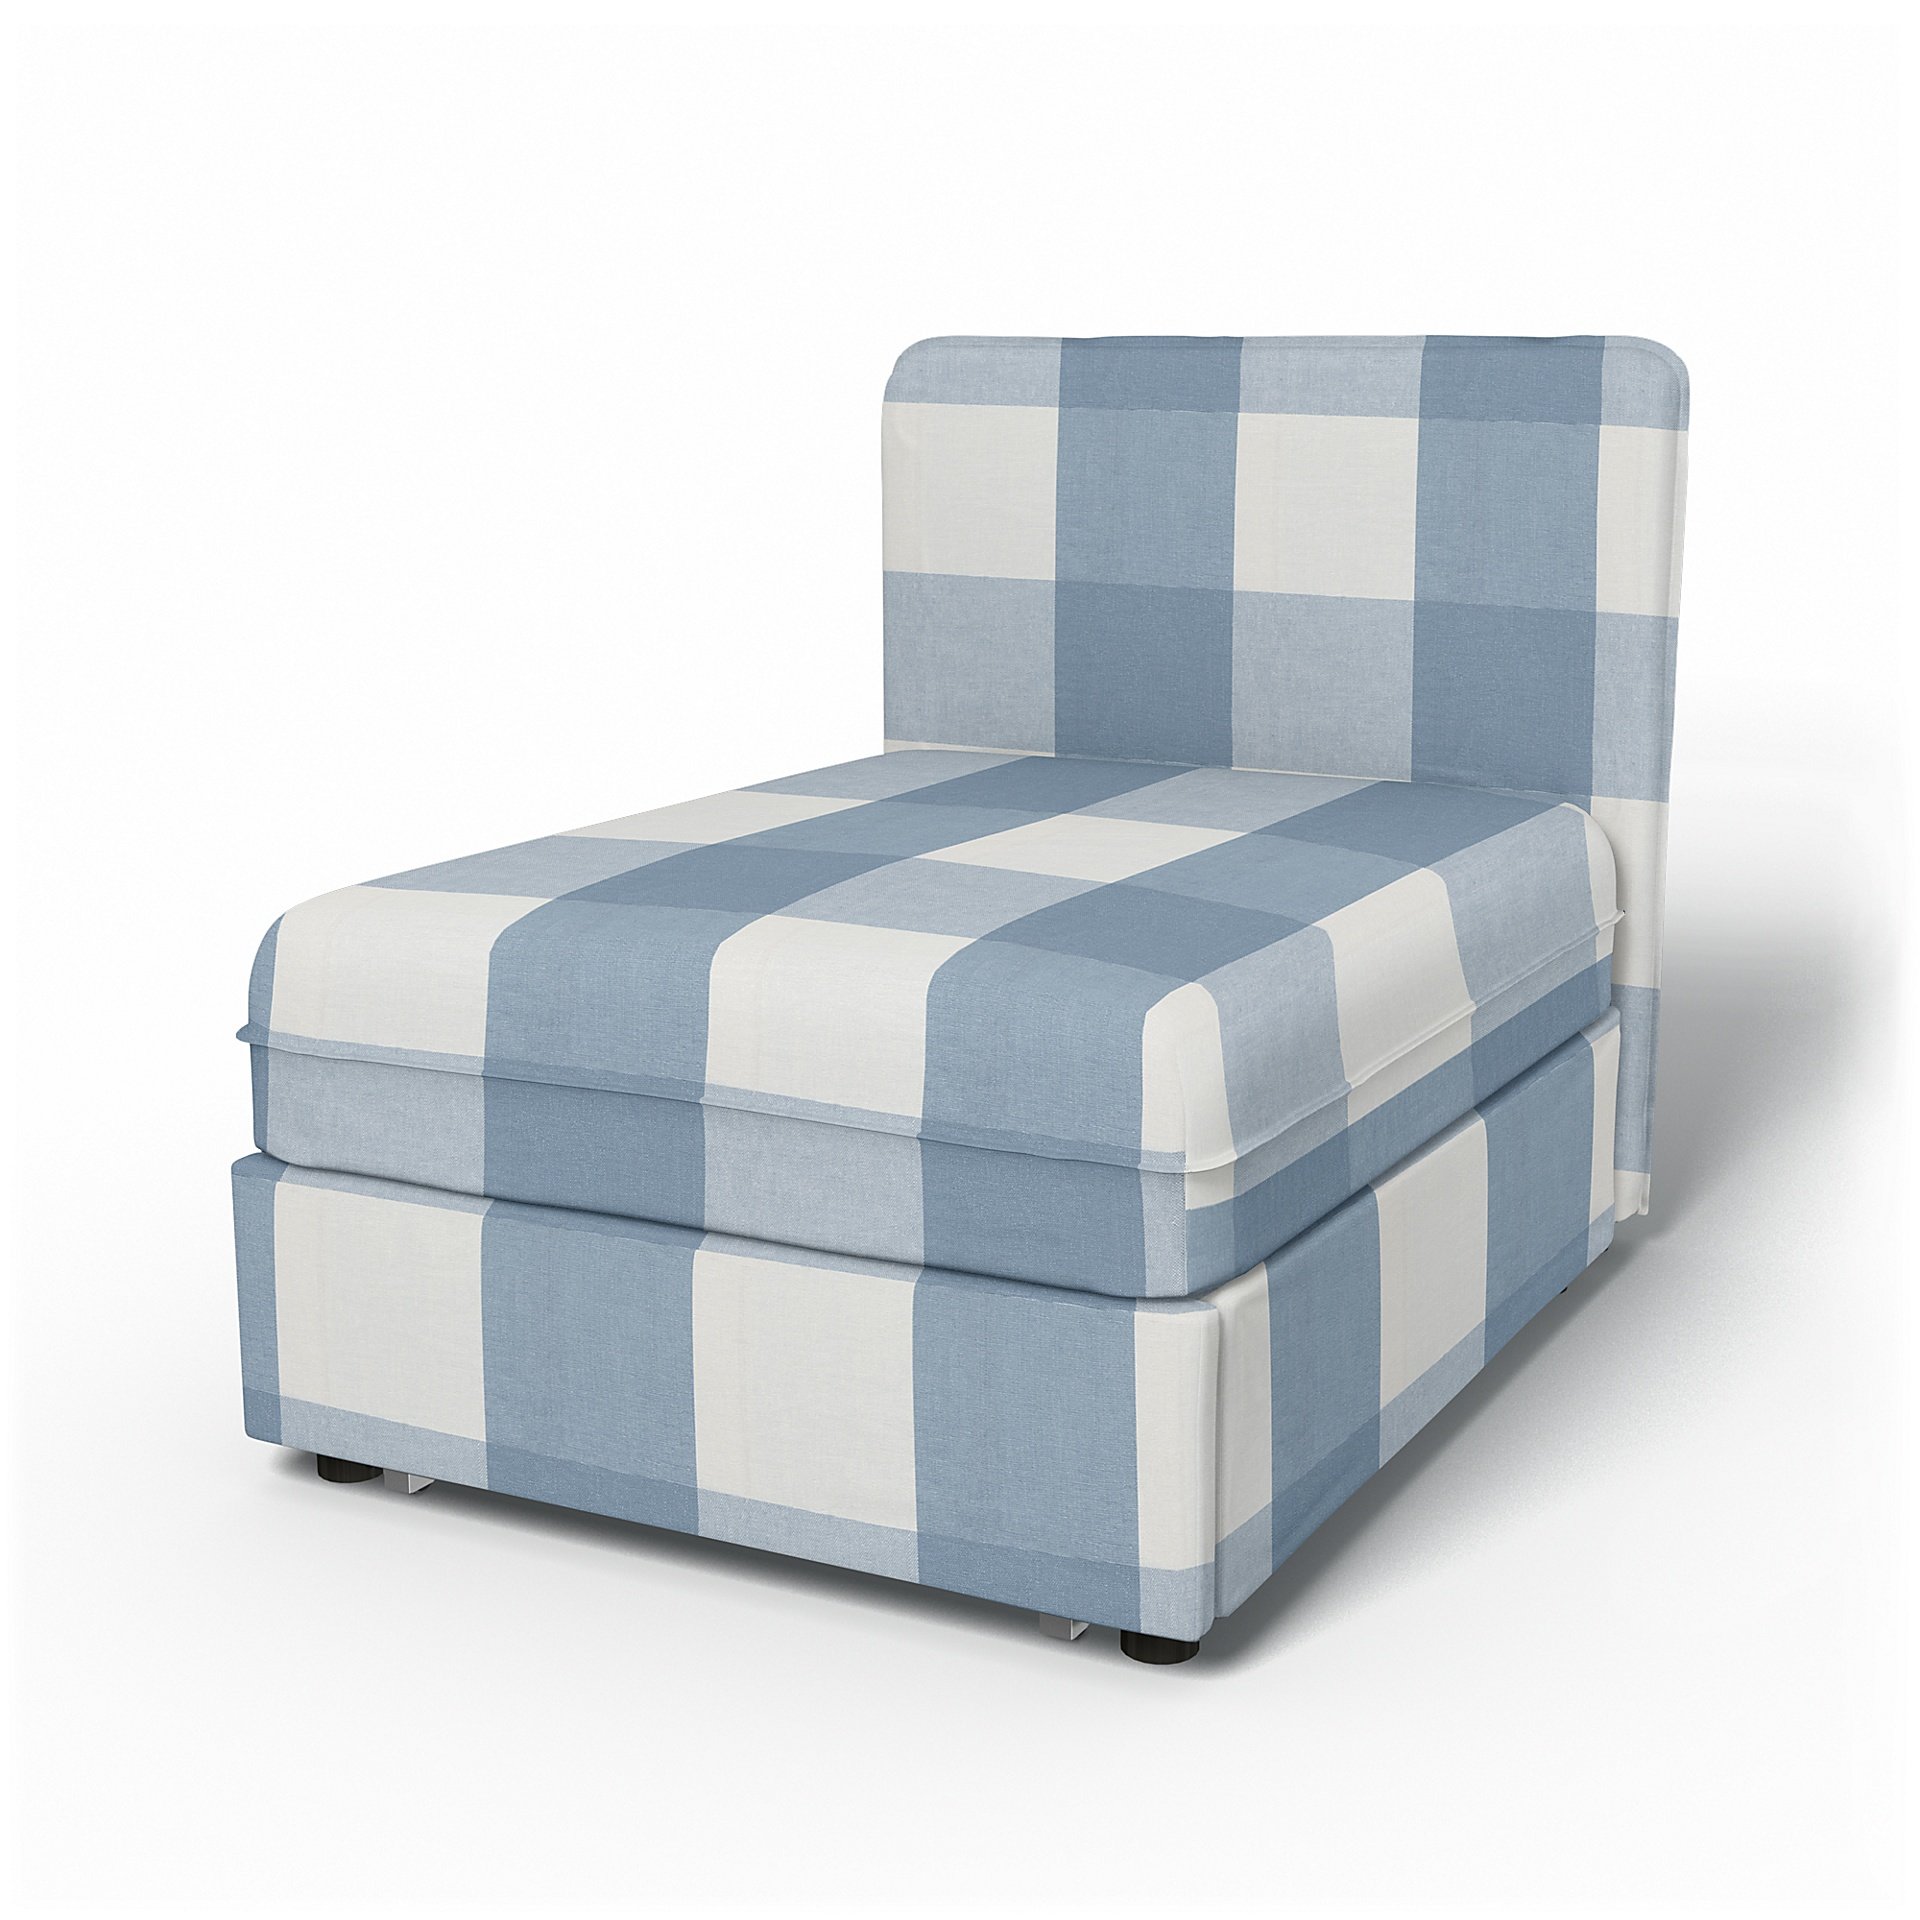 IKEA - Vallentuna Seat Module with Low Back Sofa Bed Cover 80x100 cm 32x39in, Sky Blue, Linen - Bemz